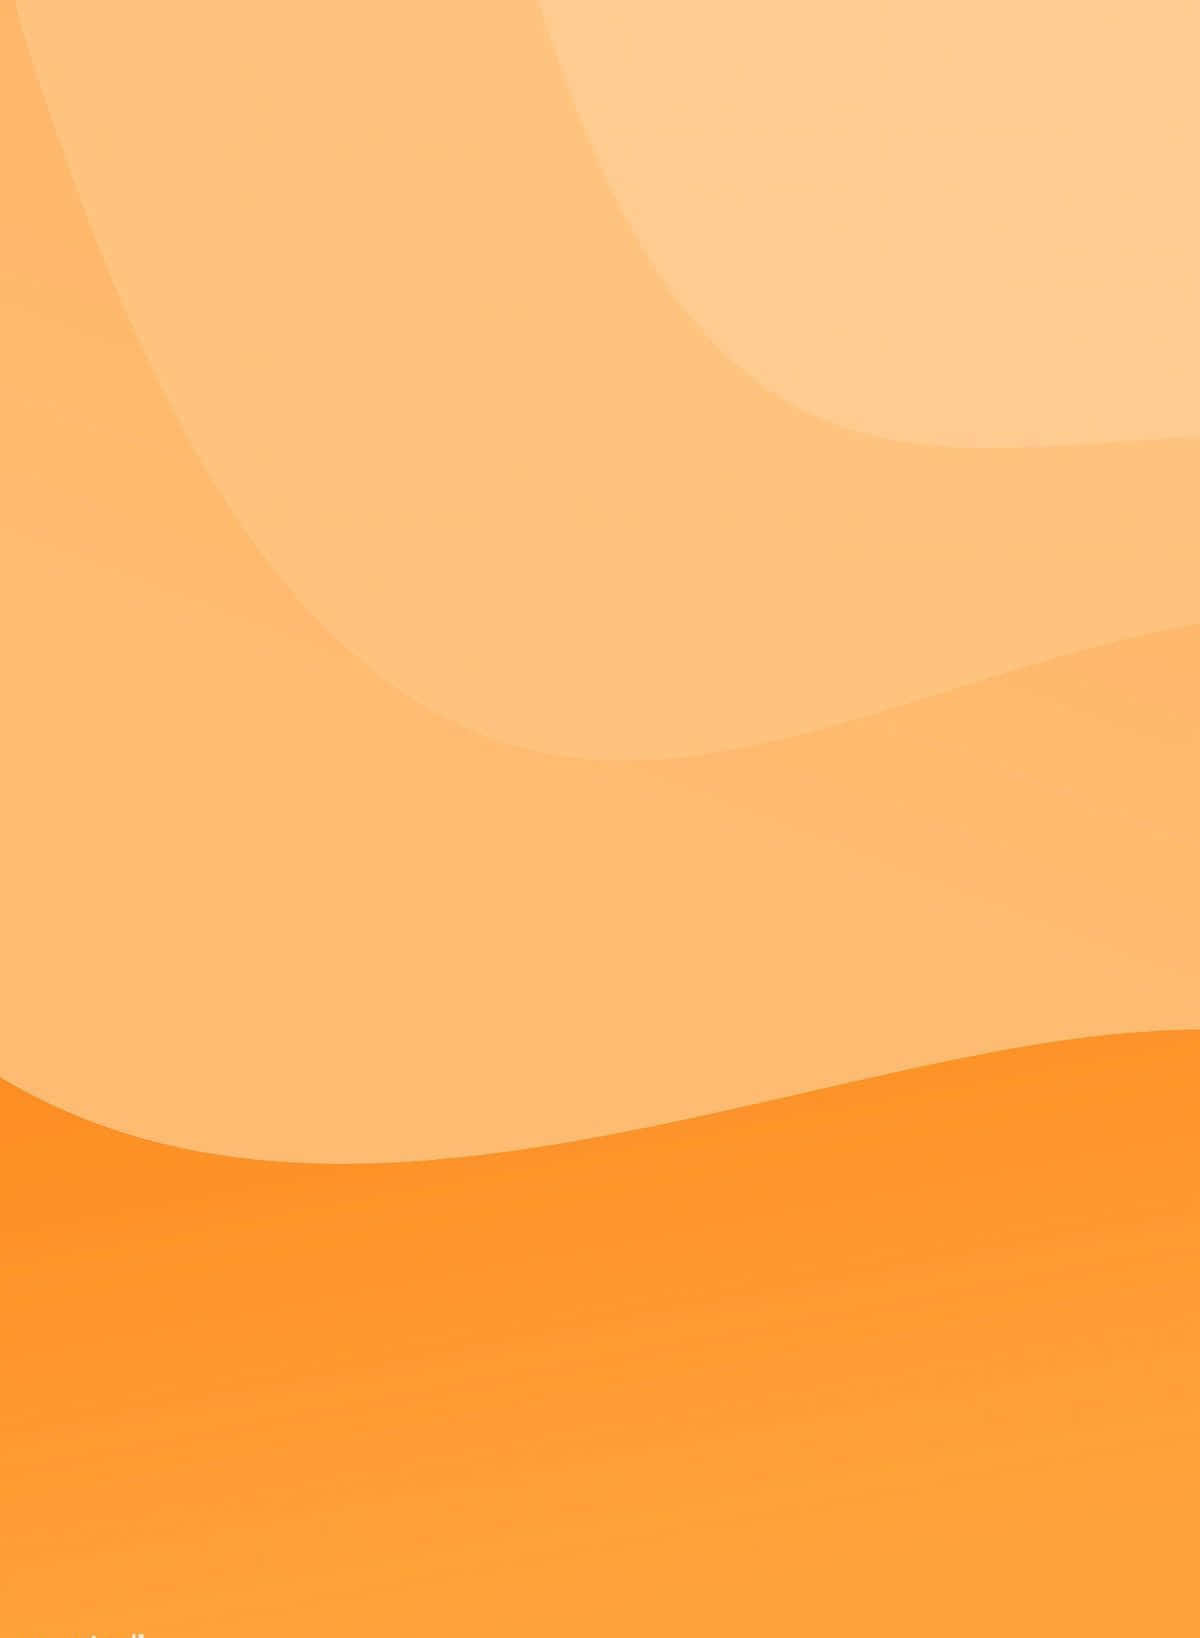 Adorable Orange Background with Playful Polka Dots